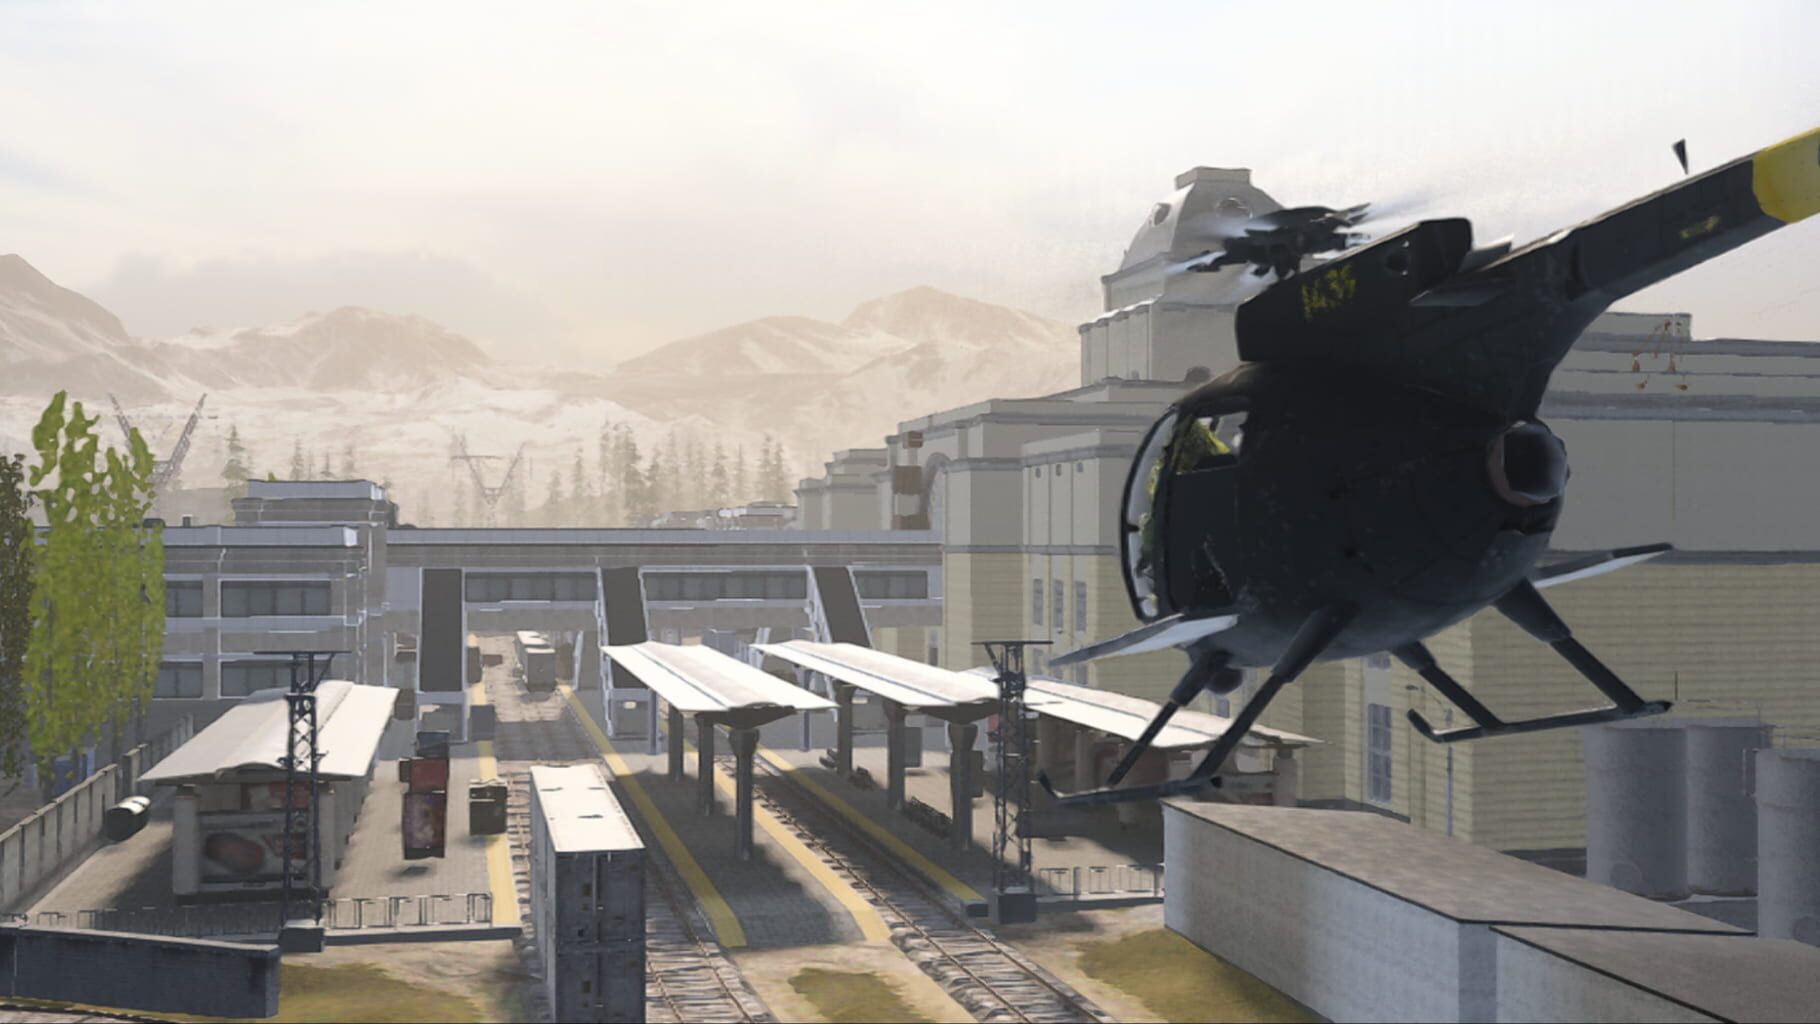 Call of Duty: Warzone Mobile screenshots